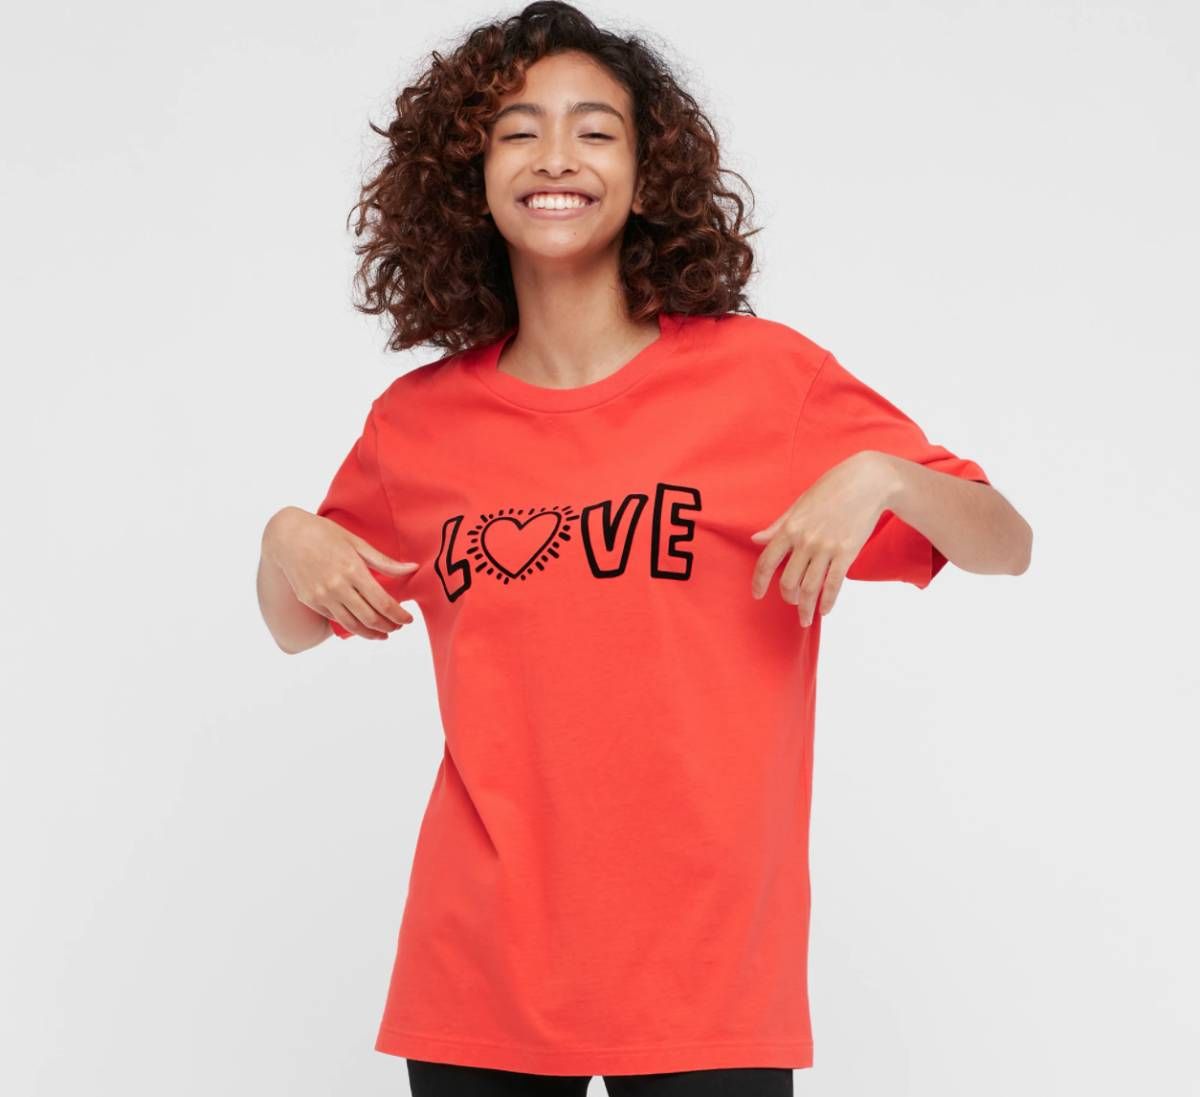 Camiseta de Uniqlo con dibujo &#039;Love&#039; estampado